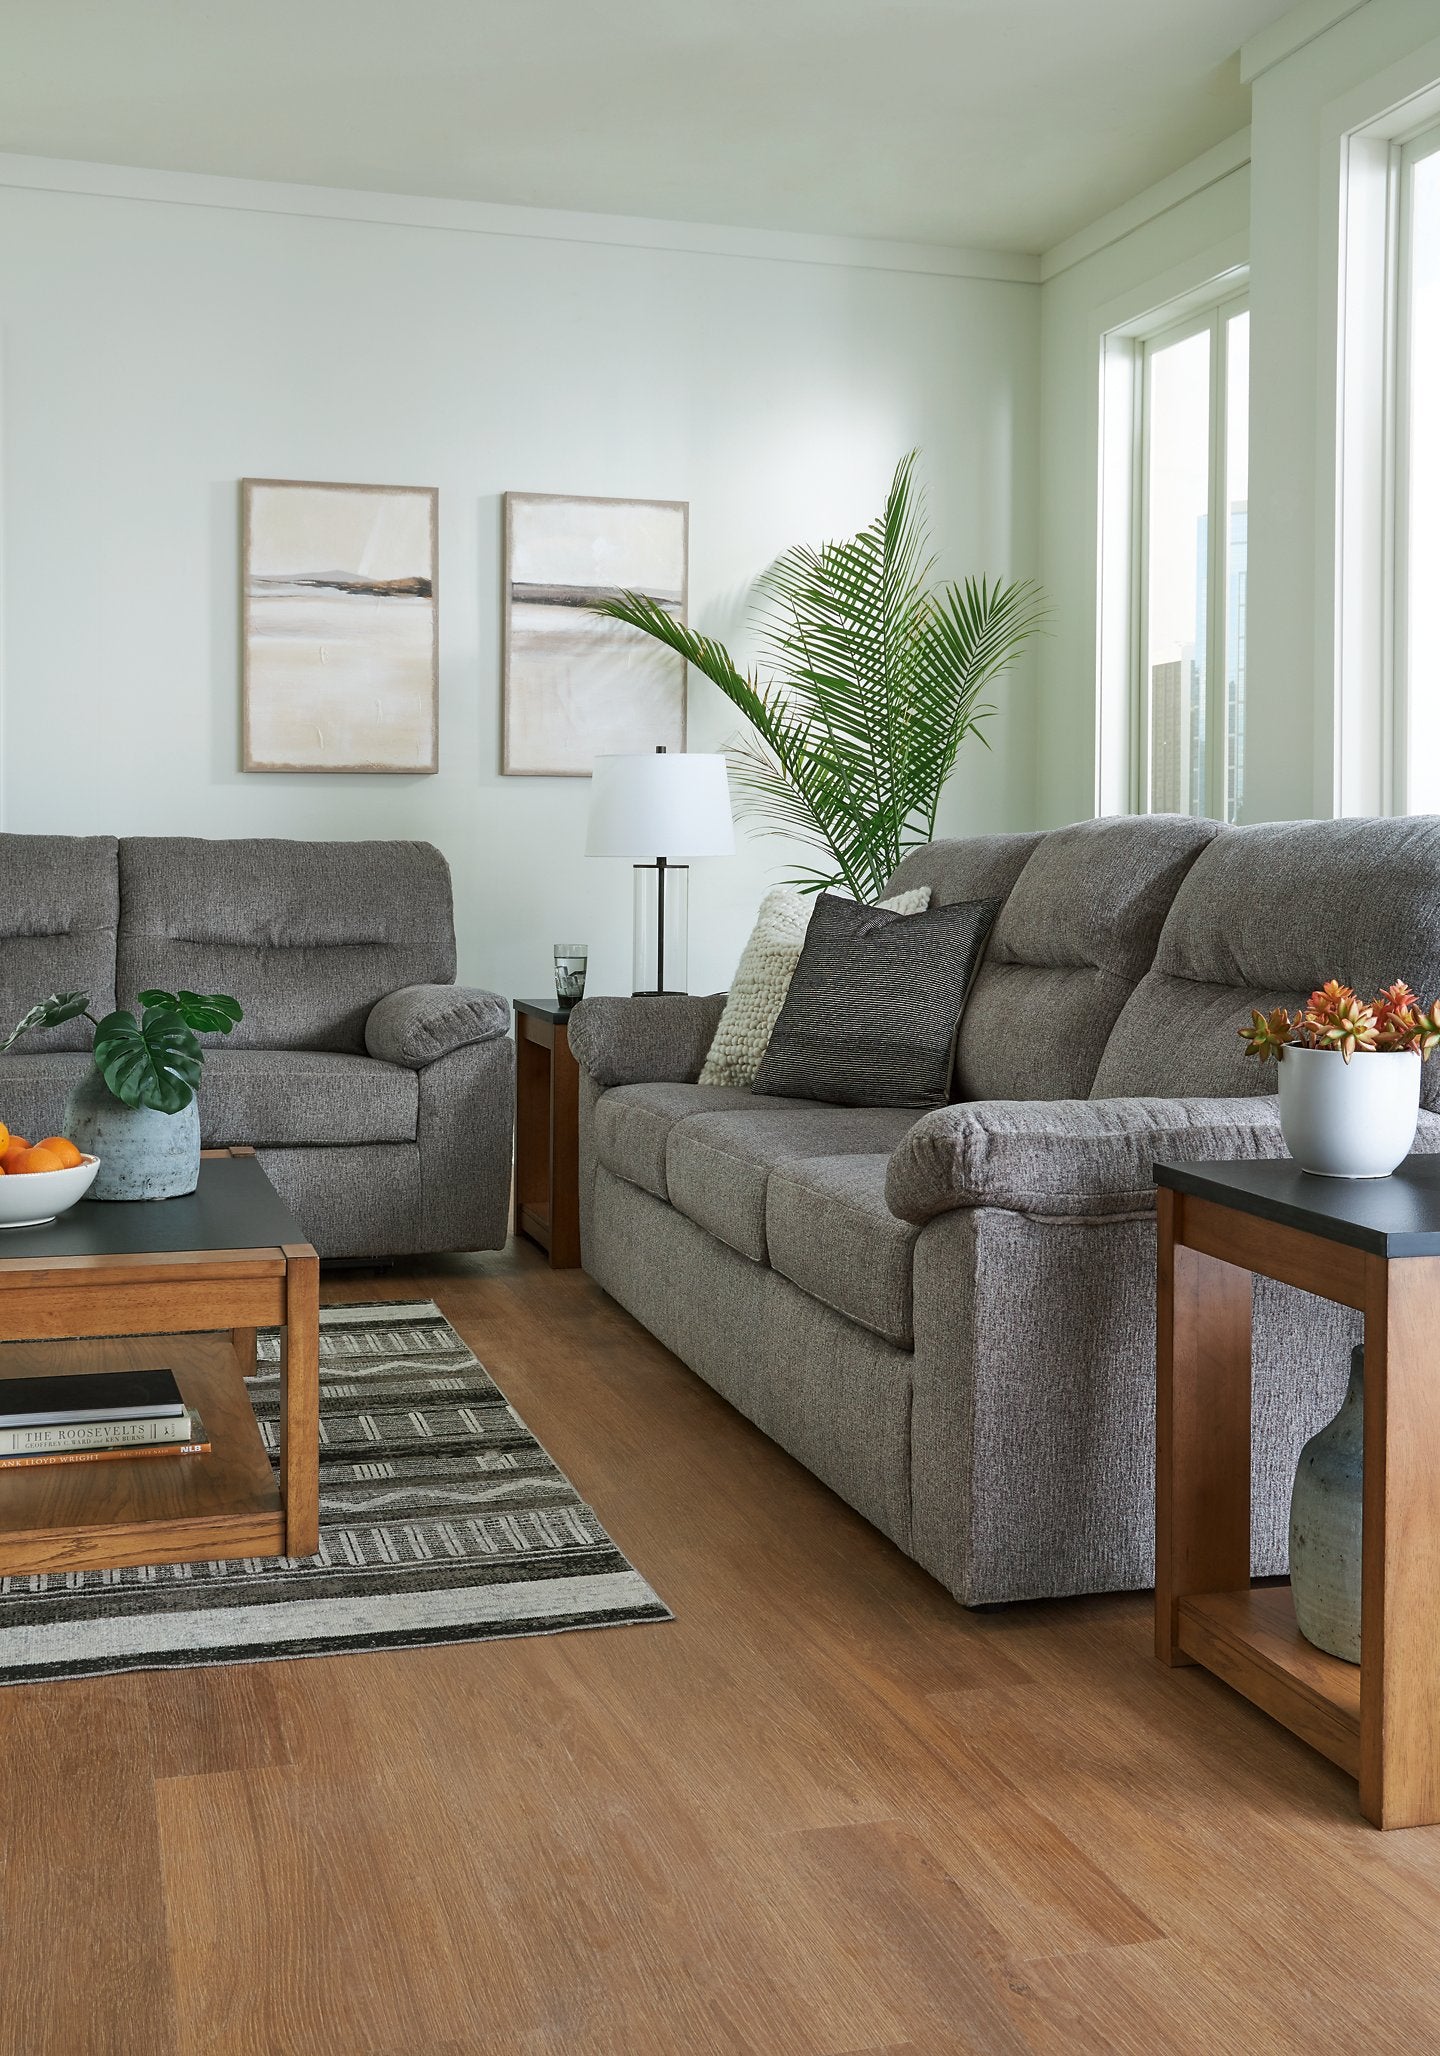 Bindura Living Room Set - Luxury Home Furniture (MI)